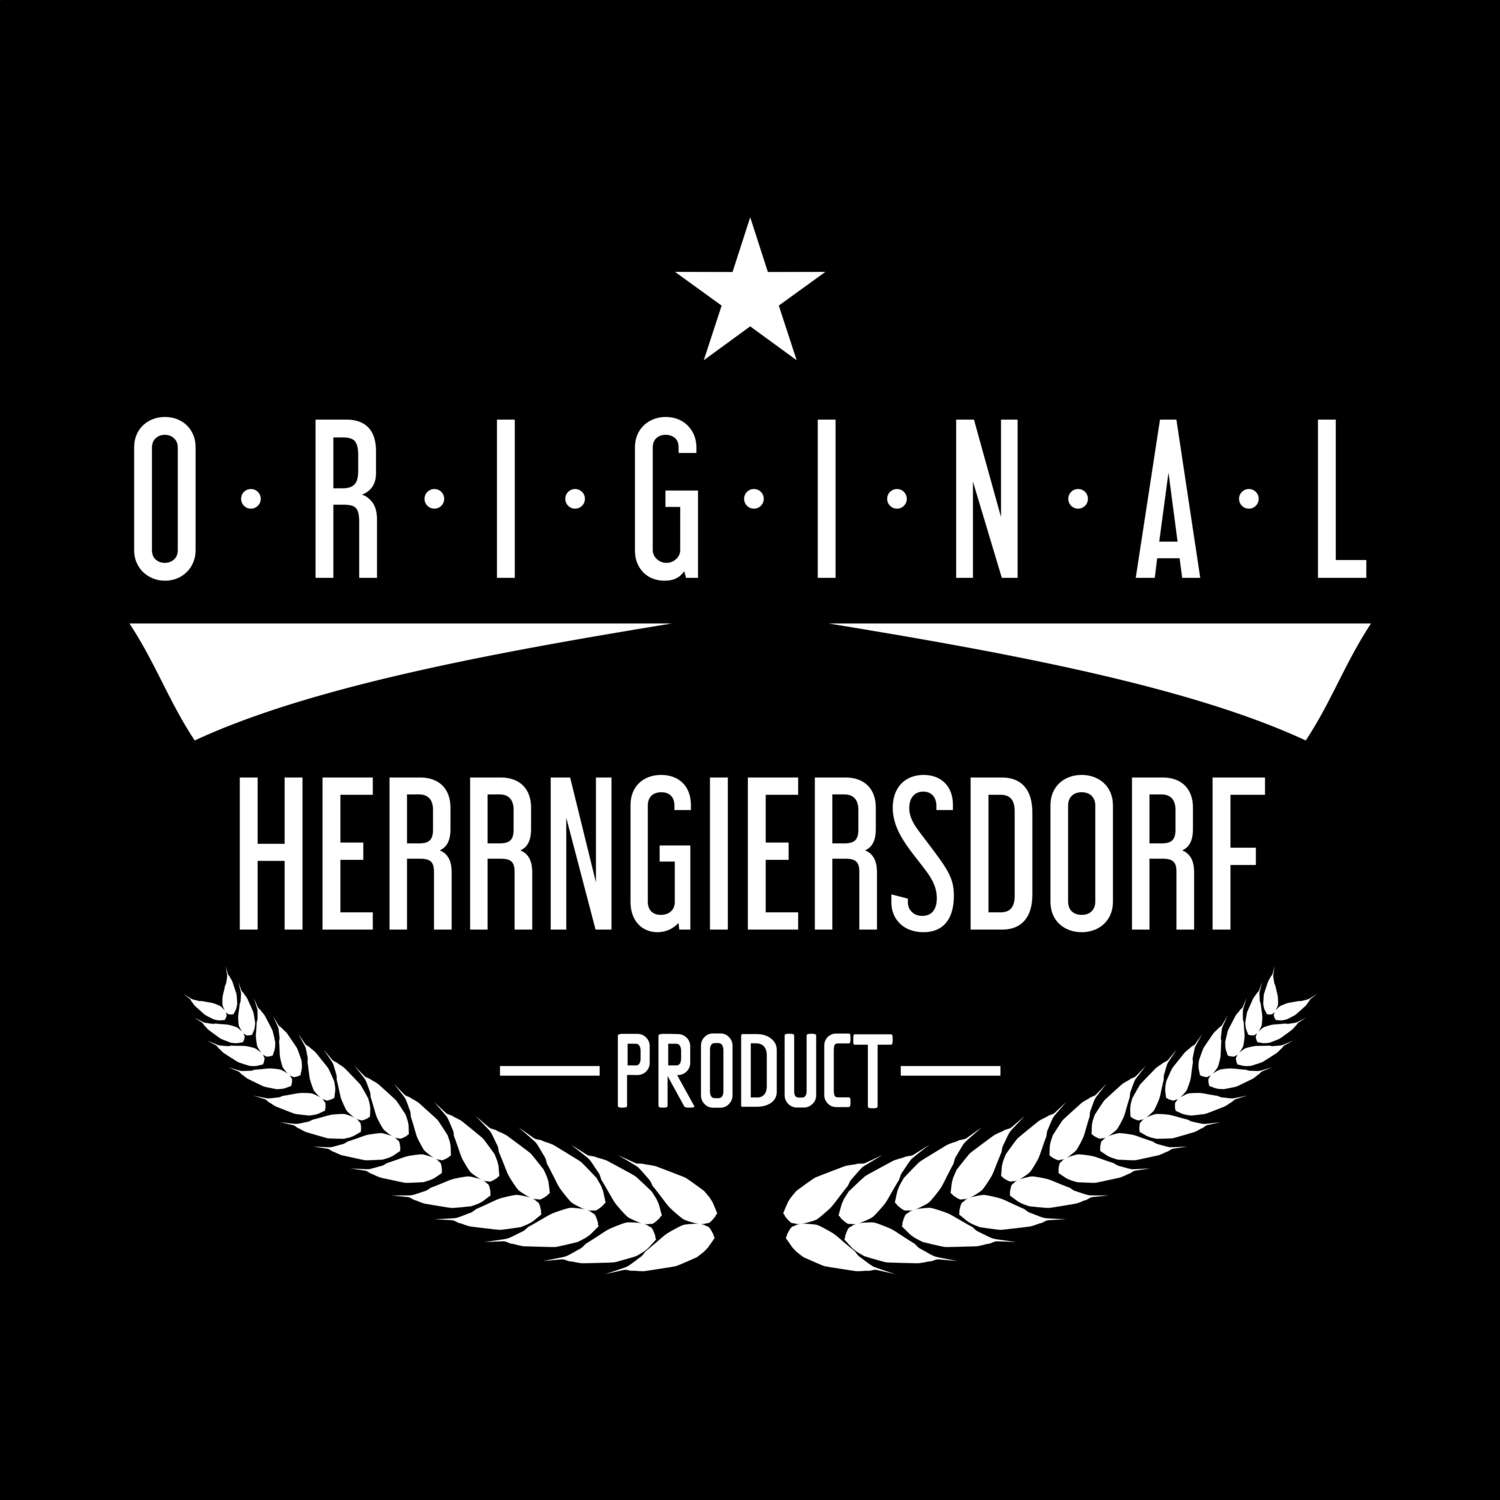 Herrngiersdorf T-Shirt »Original Product«